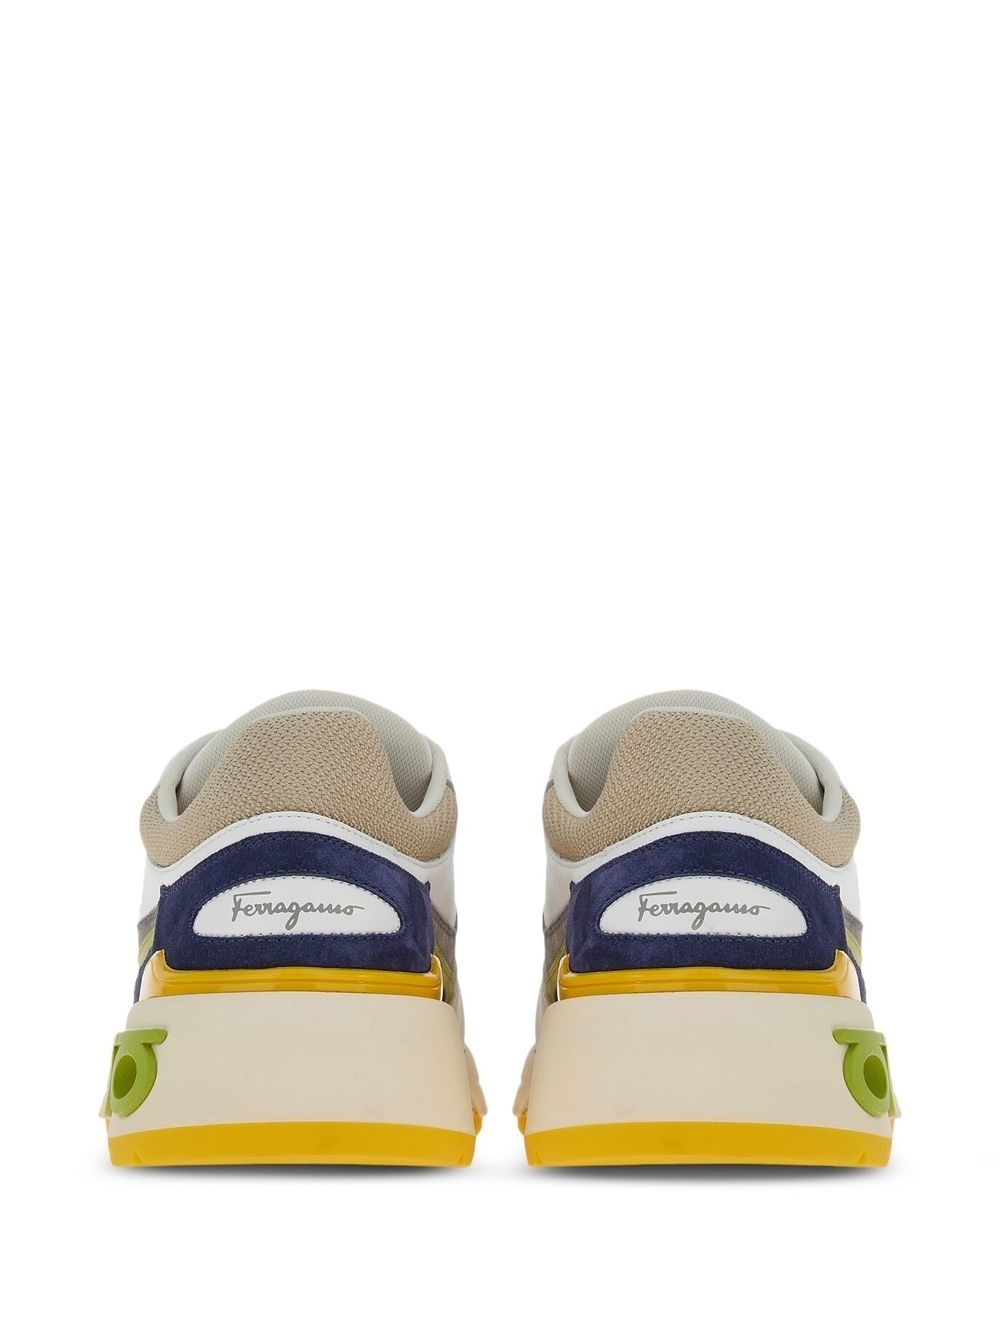 Ferragamo Gancini-insert leather sneakers - Yellow